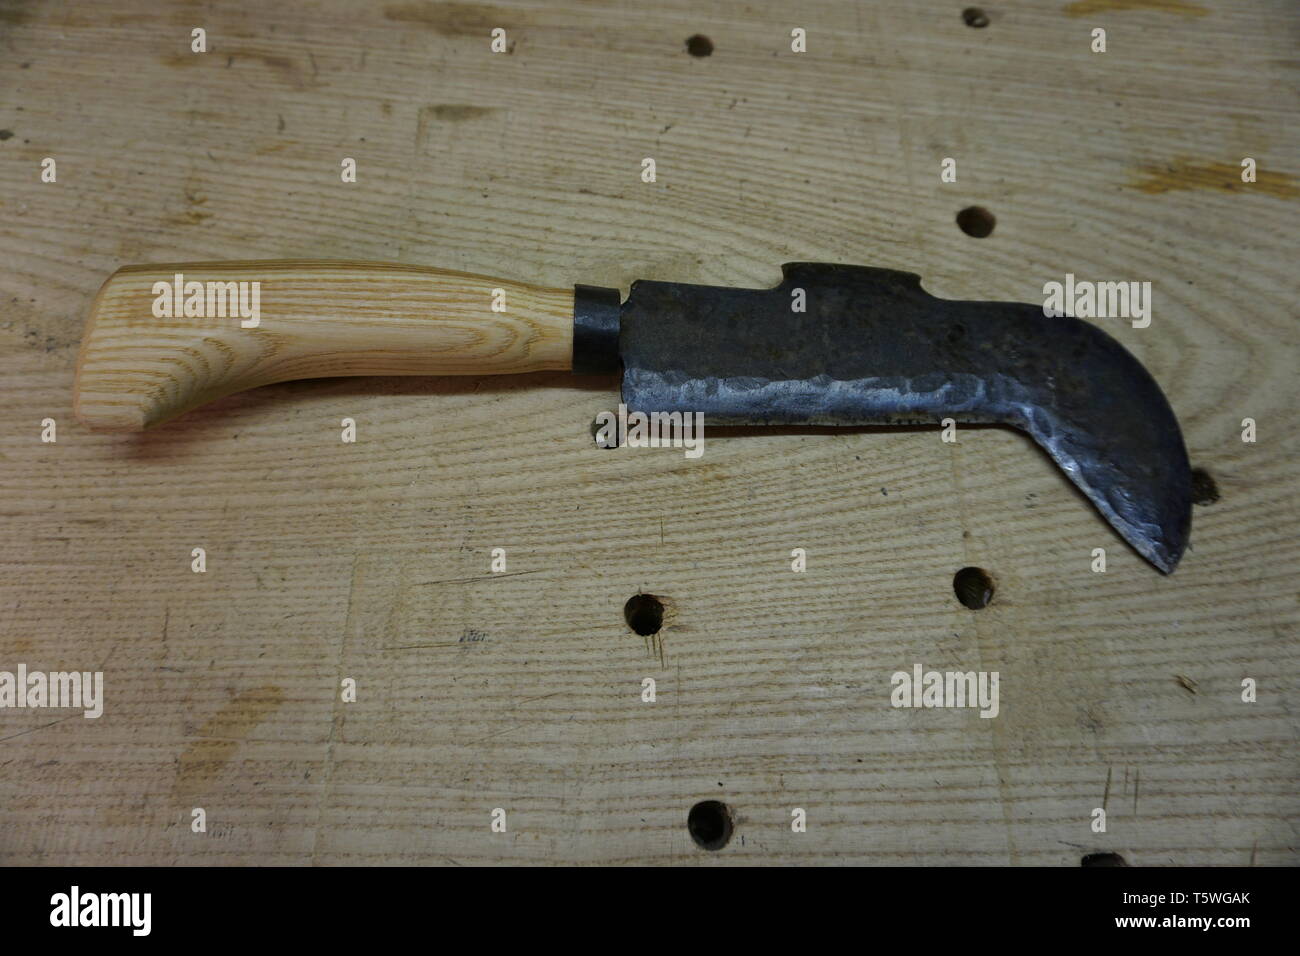 daegrad tools billhook brightside pattern no2 made in sheffield Stock Photo